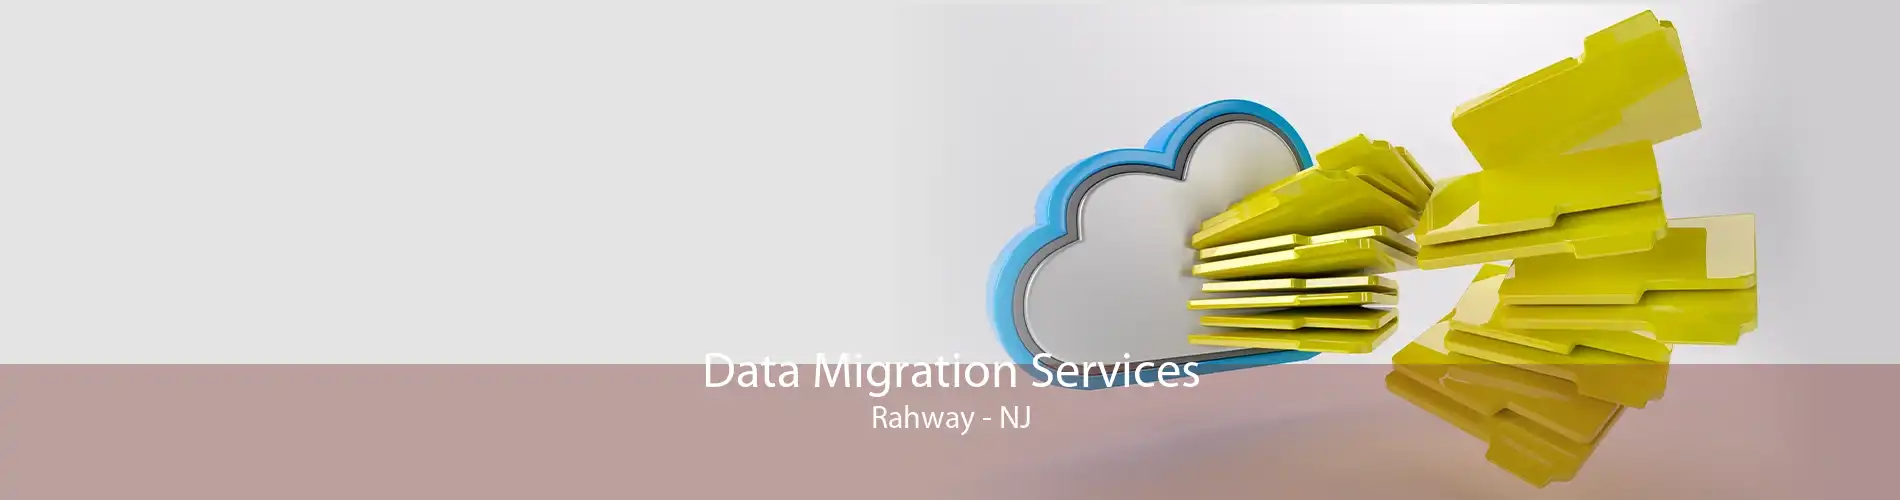 Data Migration Services Rahway - NJ